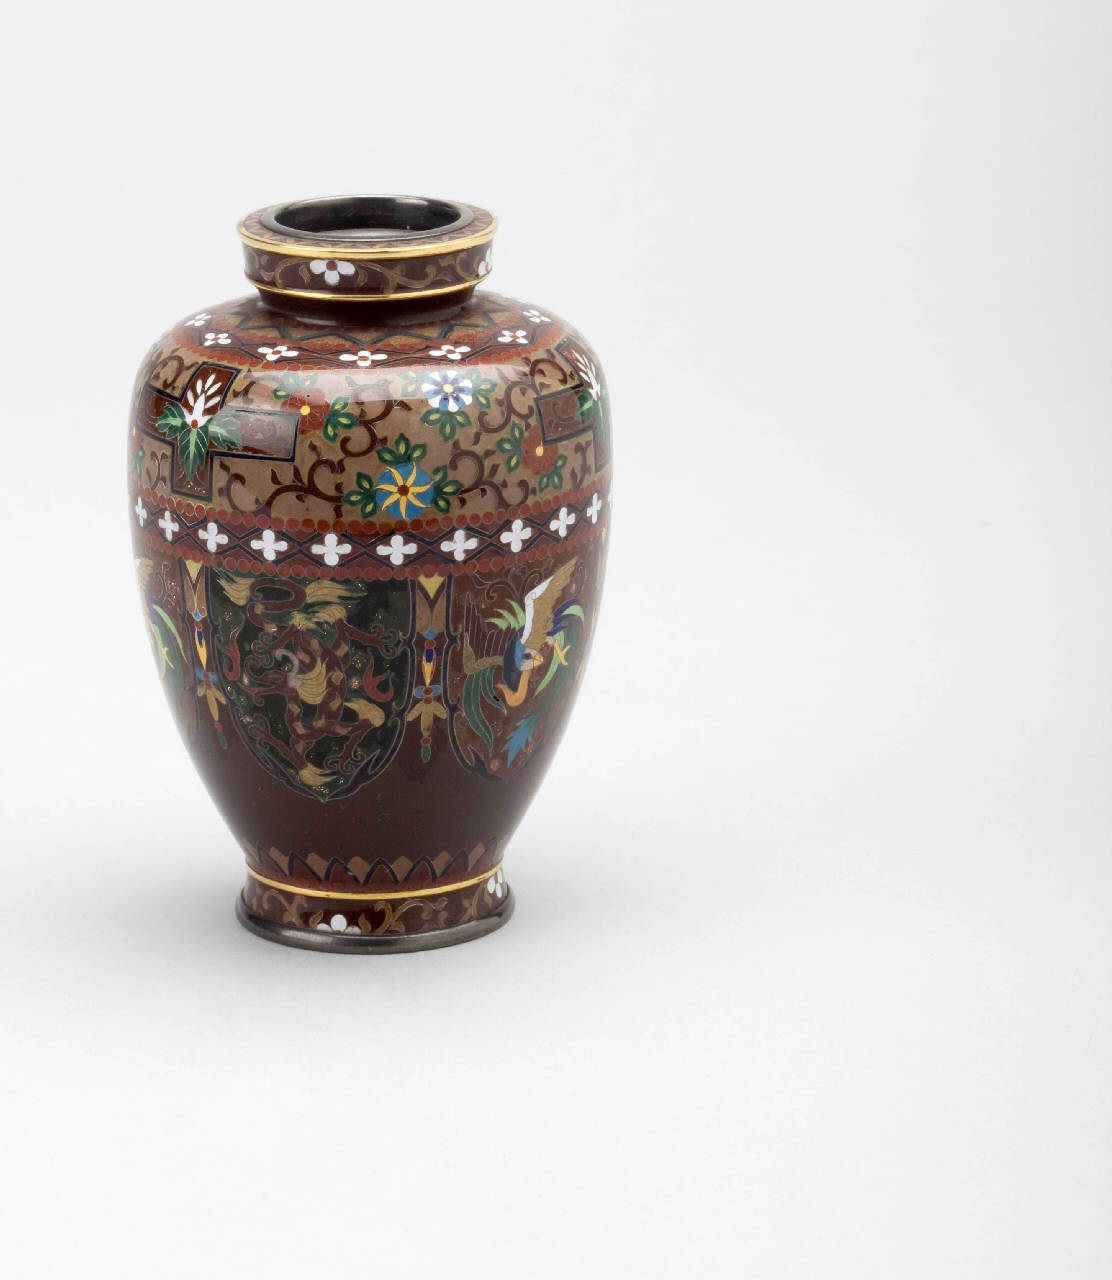 drago, fenici, motivi decorativi vegetali (vaso) - manifattura giapponese (ultimo quarto sec. XIX)